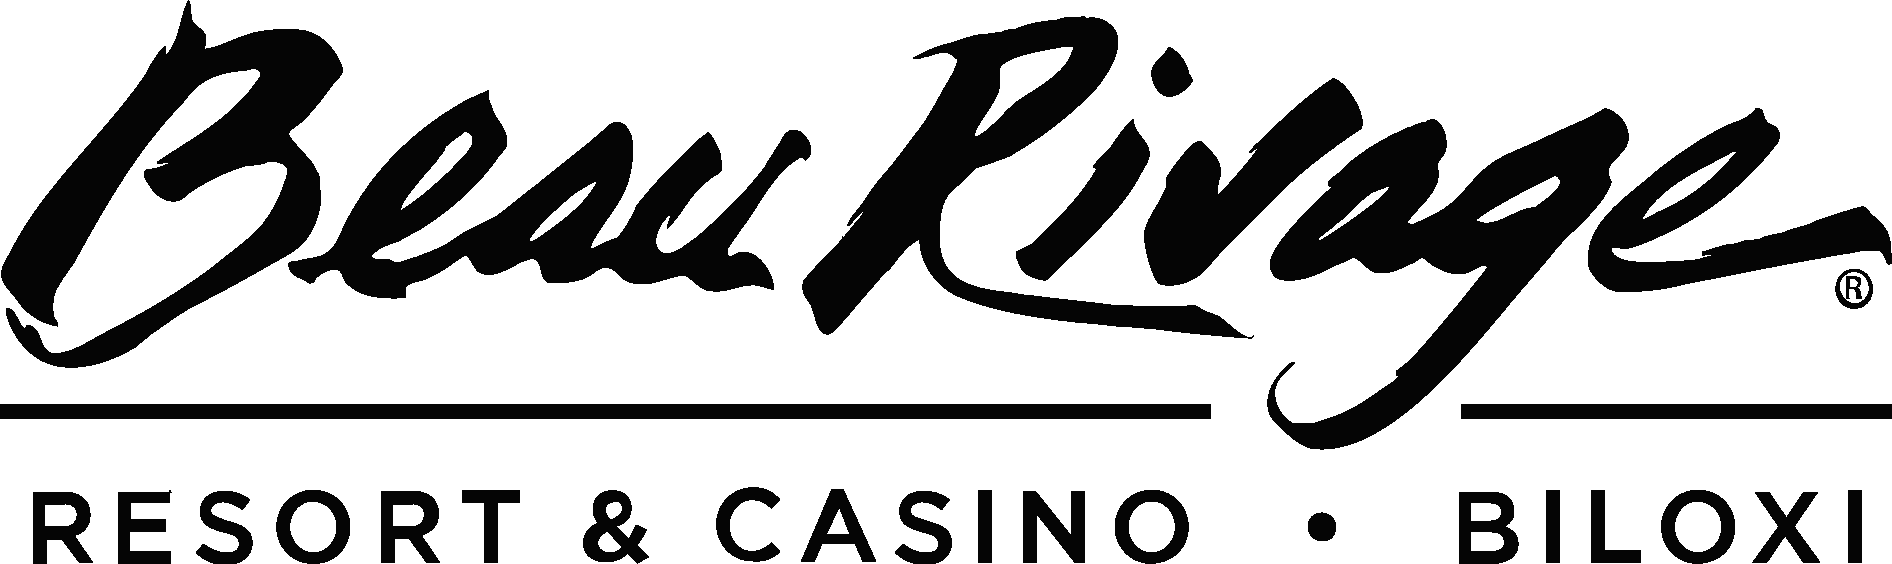 Beau Rivage Resort & Casino Biloxi  black Logo Vector